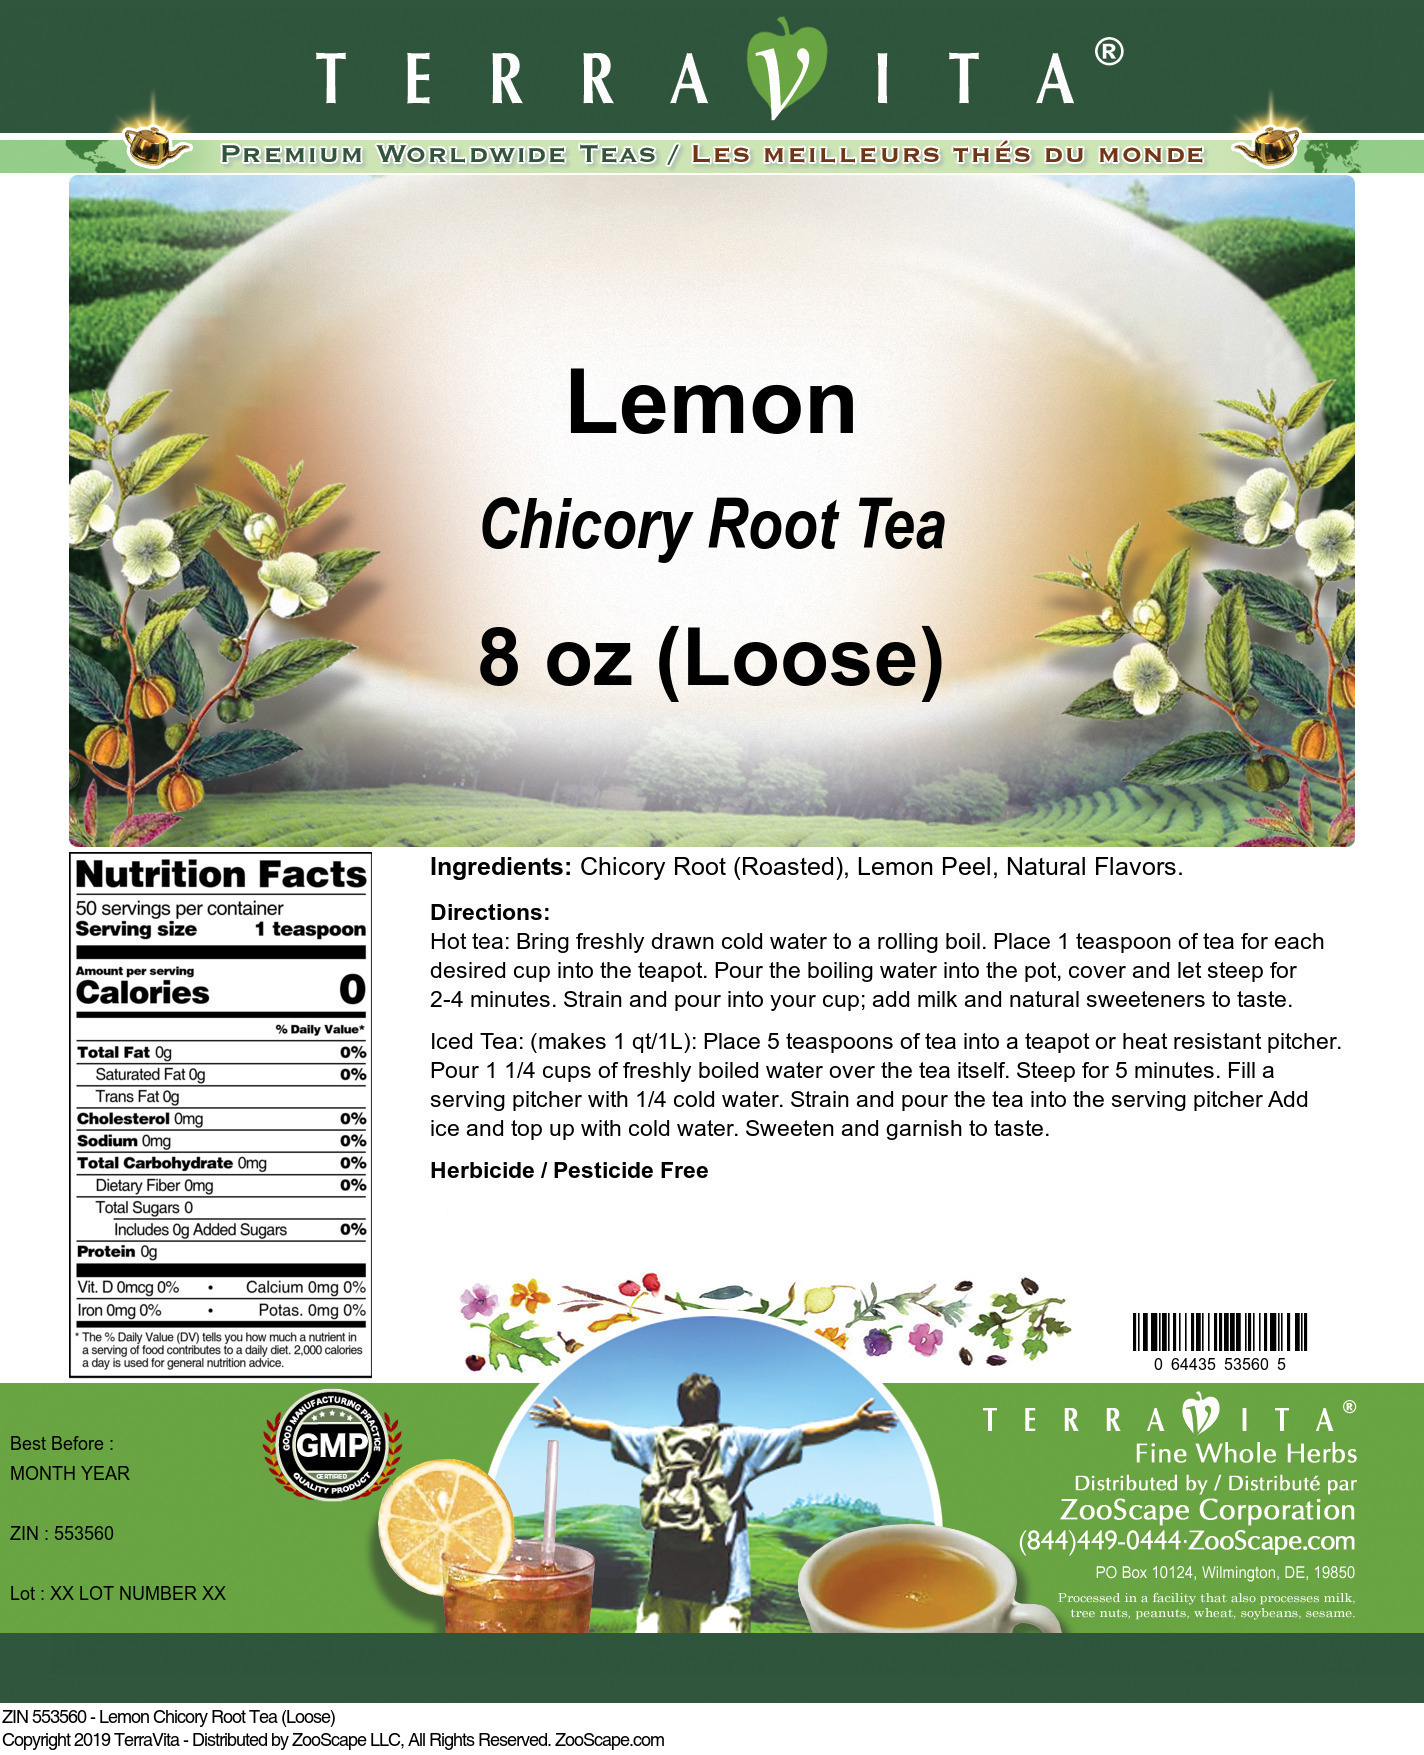 Lemon Chicory Root Tea (Loose) - Label